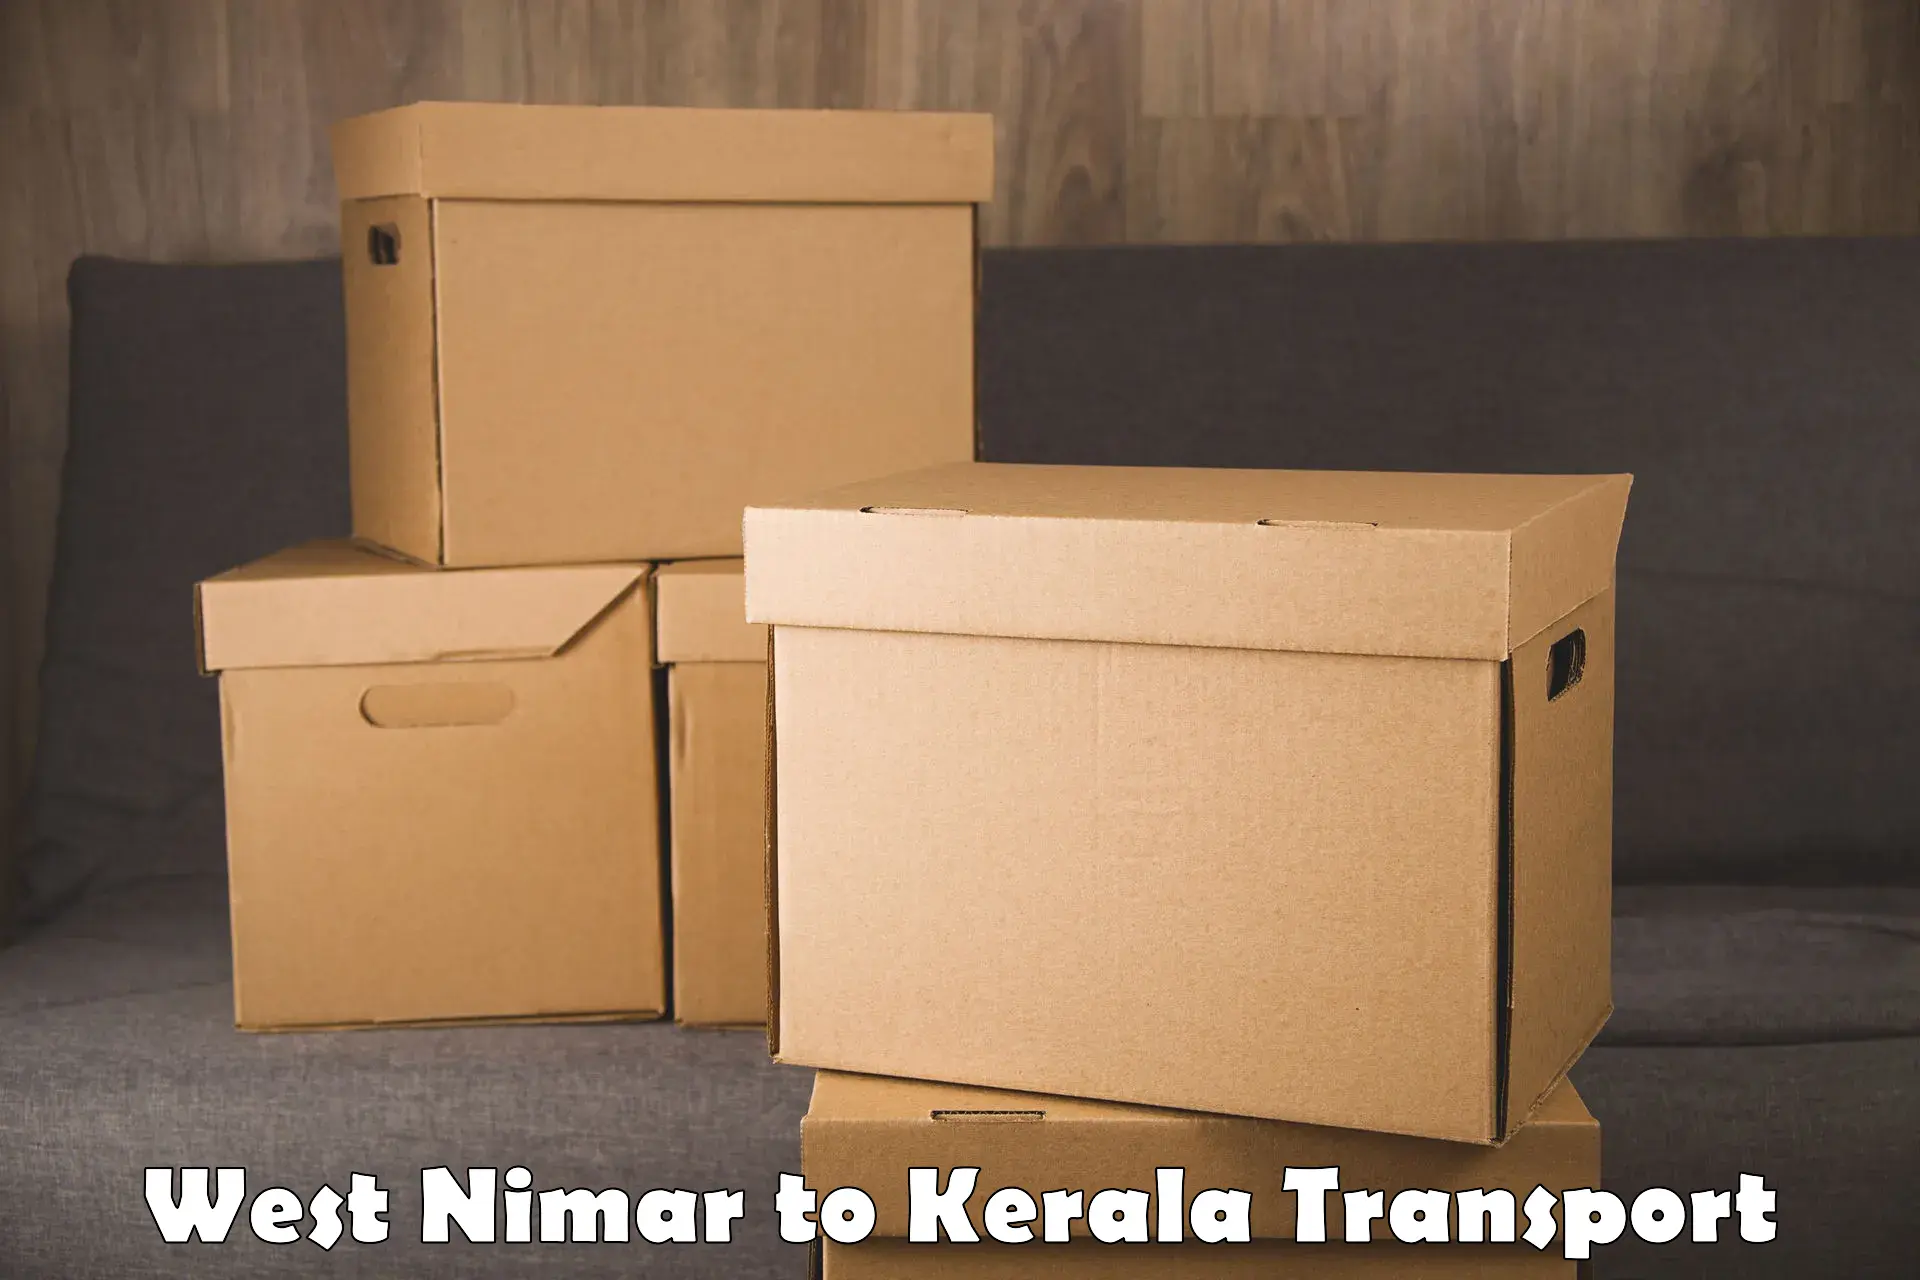 Nearby transport service West Nimar to Kerala